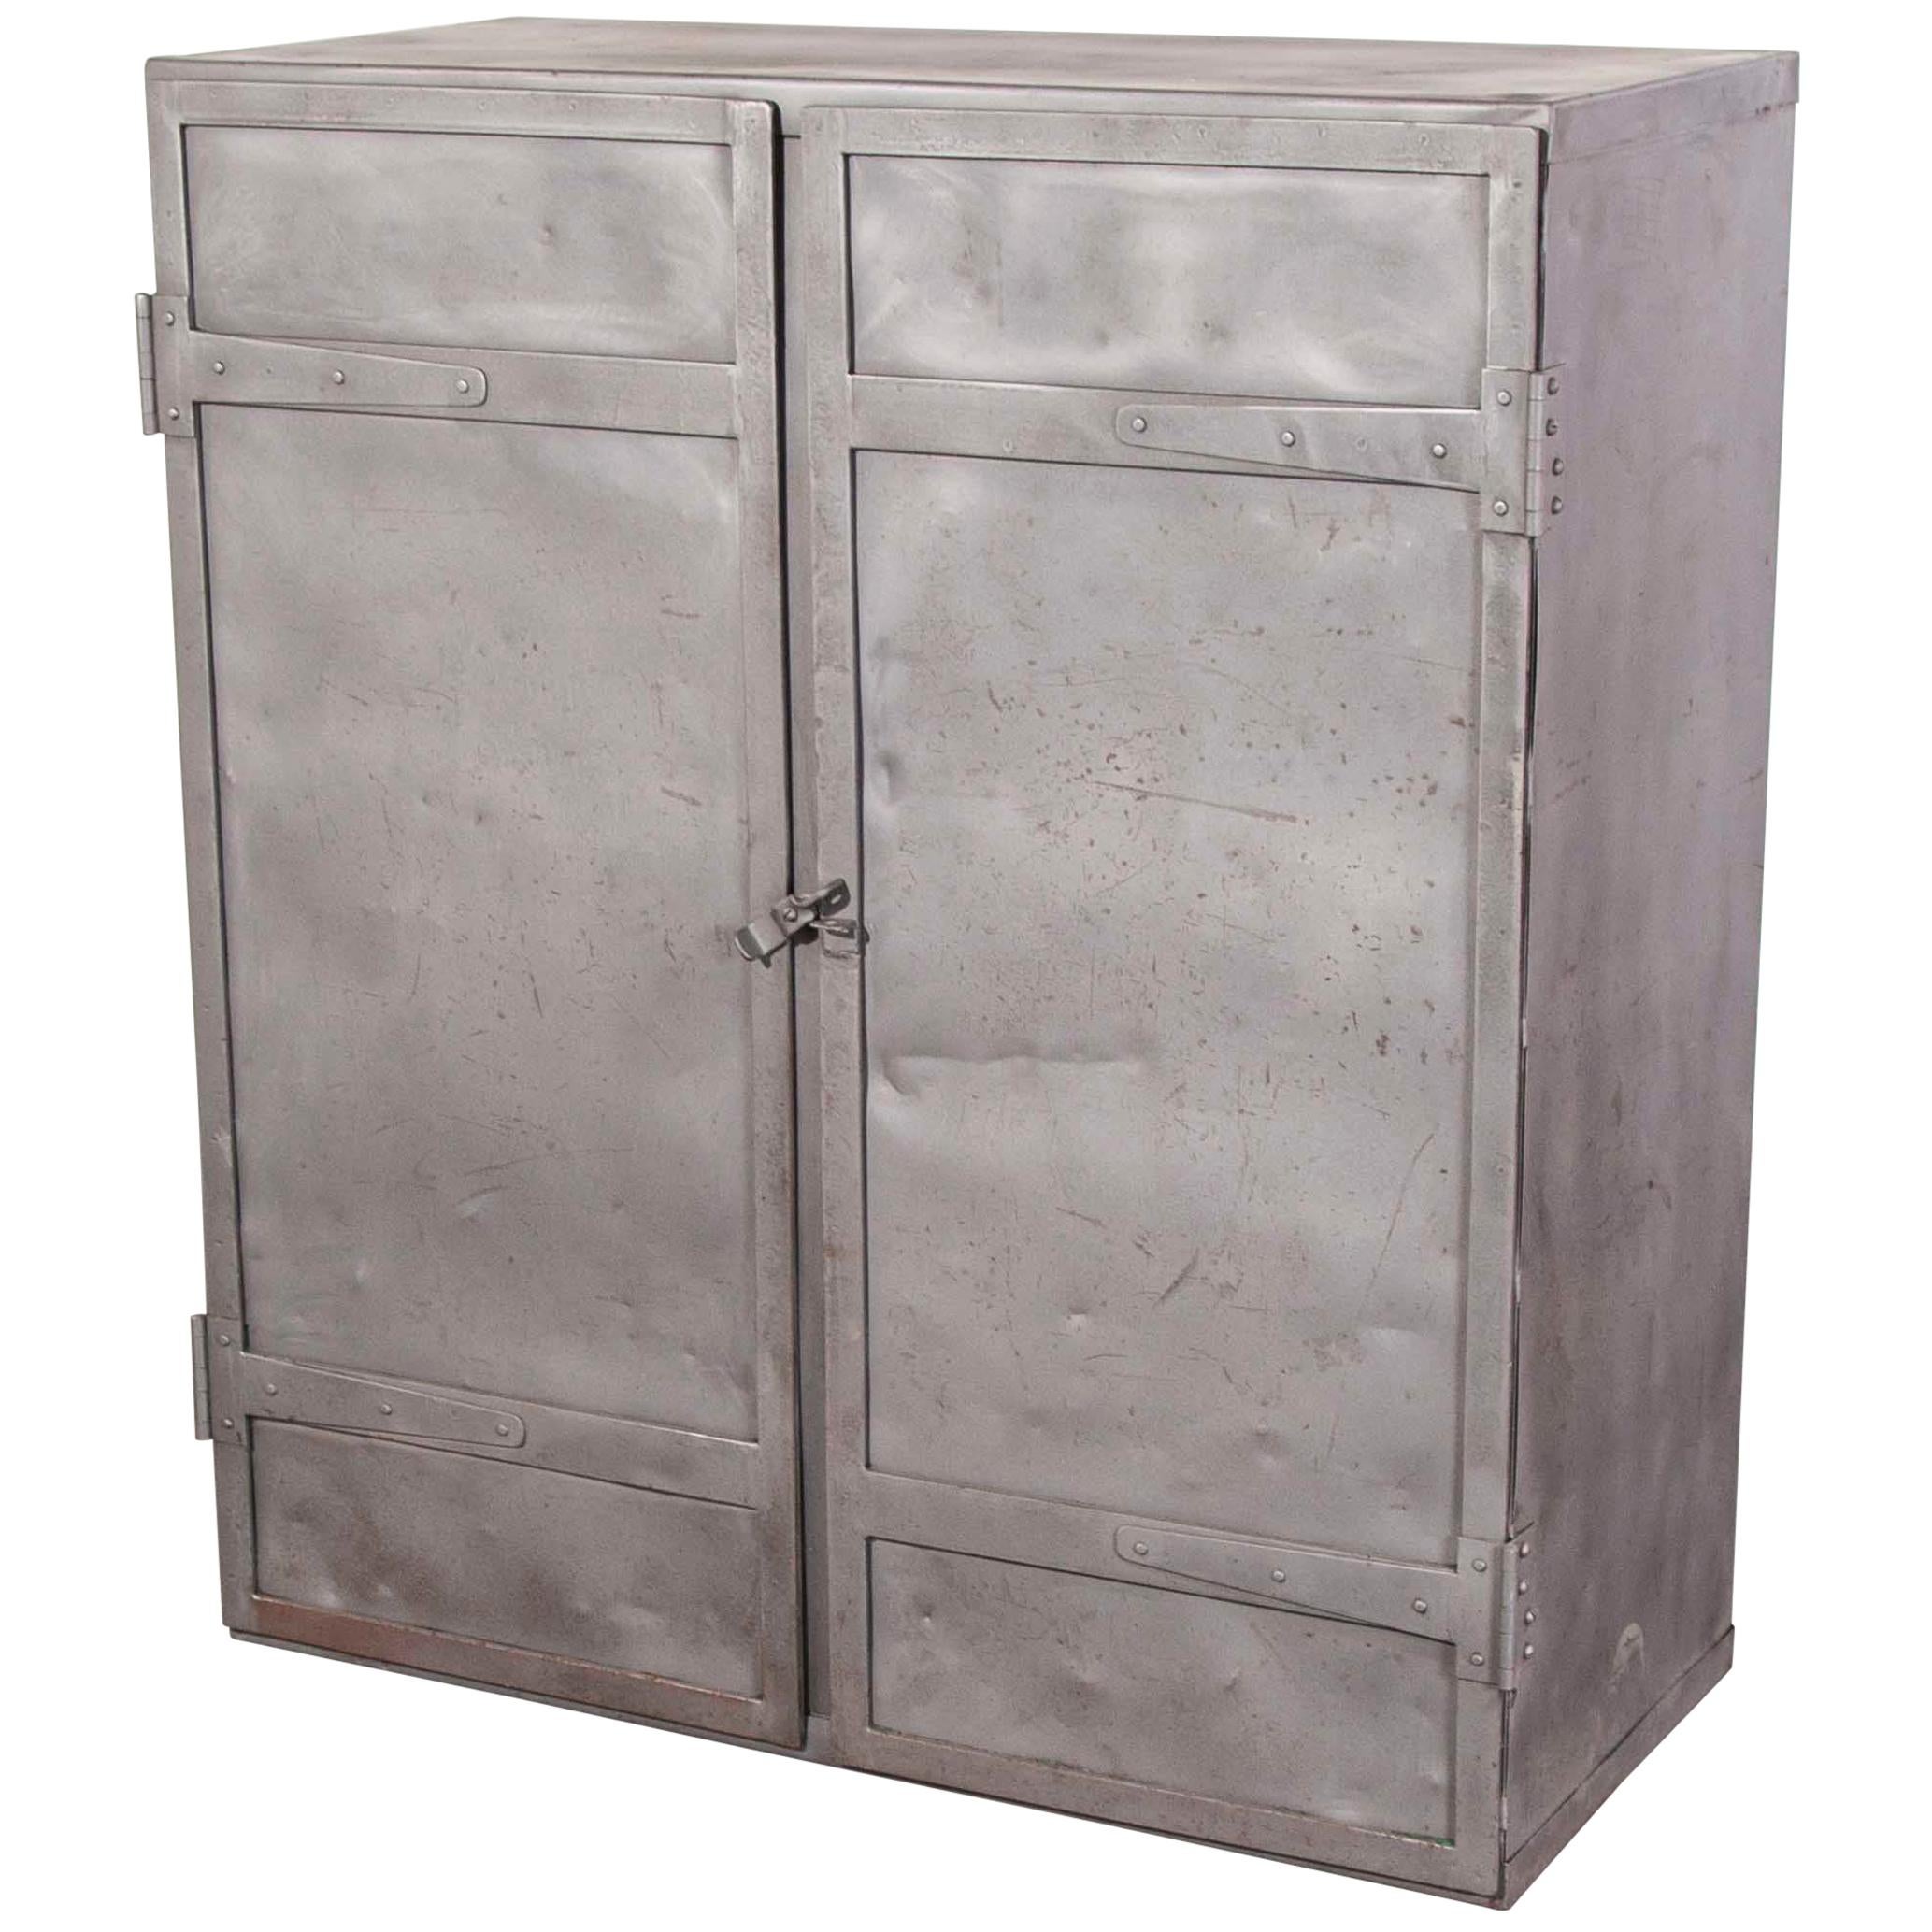 1950s English Industrial Metal Storage Cabinet, Cupboard